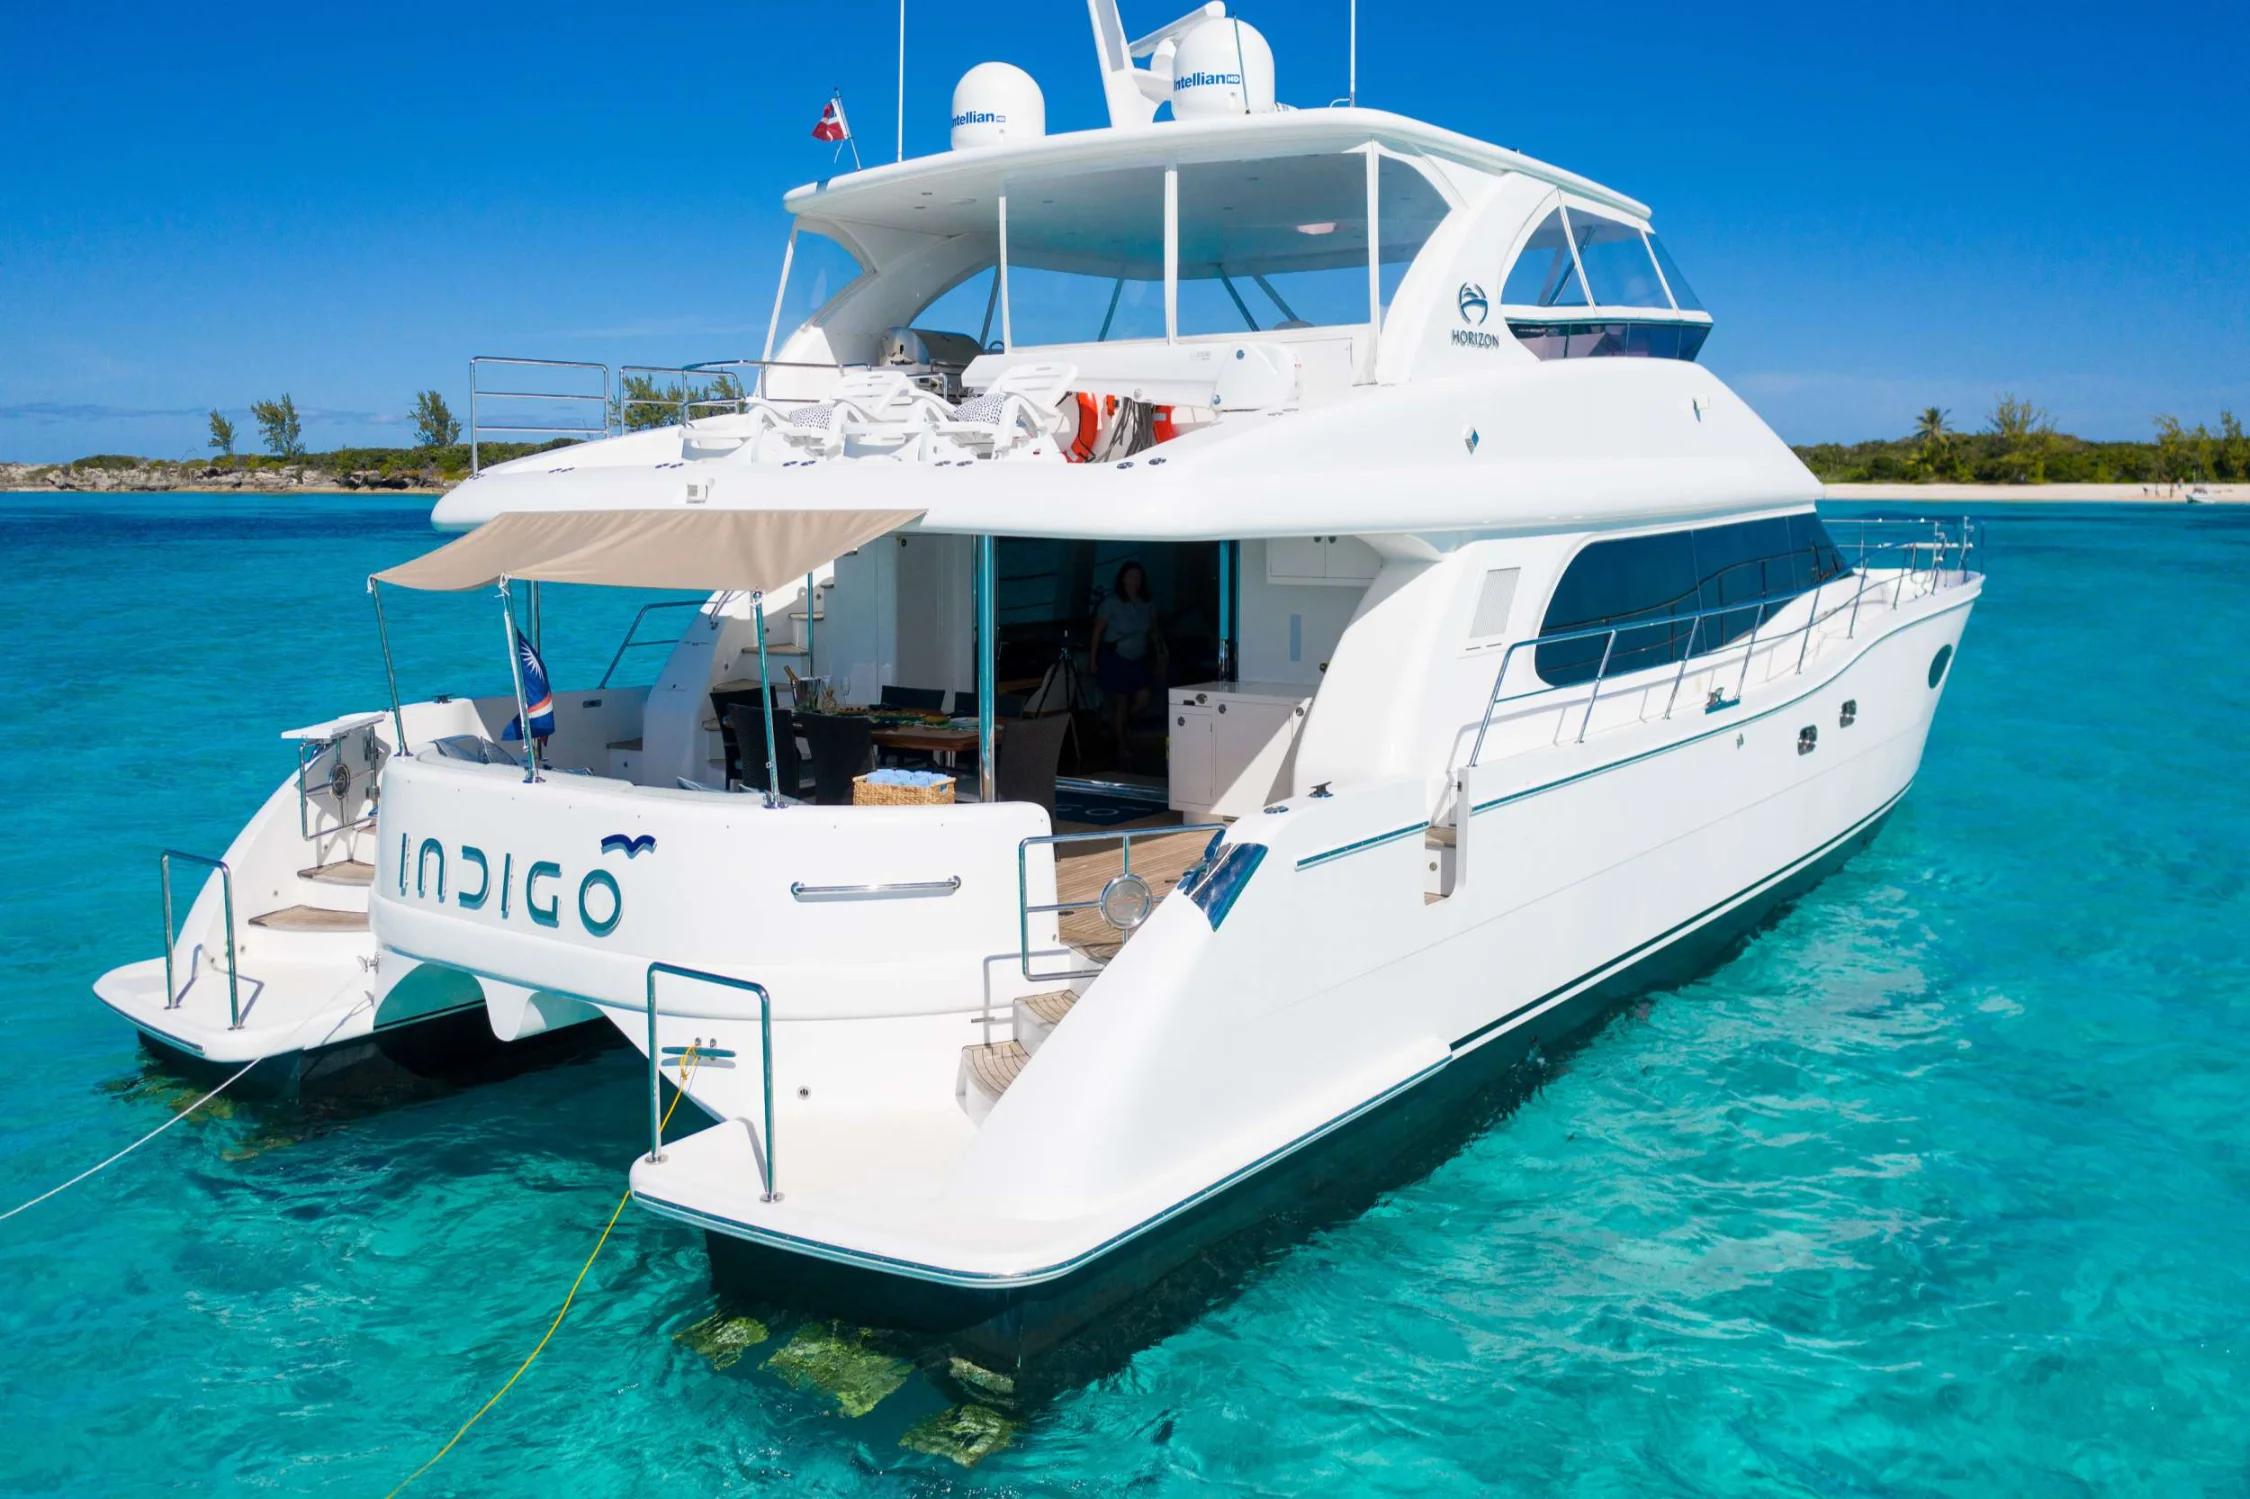 INDIGO - Virgin Islands sailing charter specials